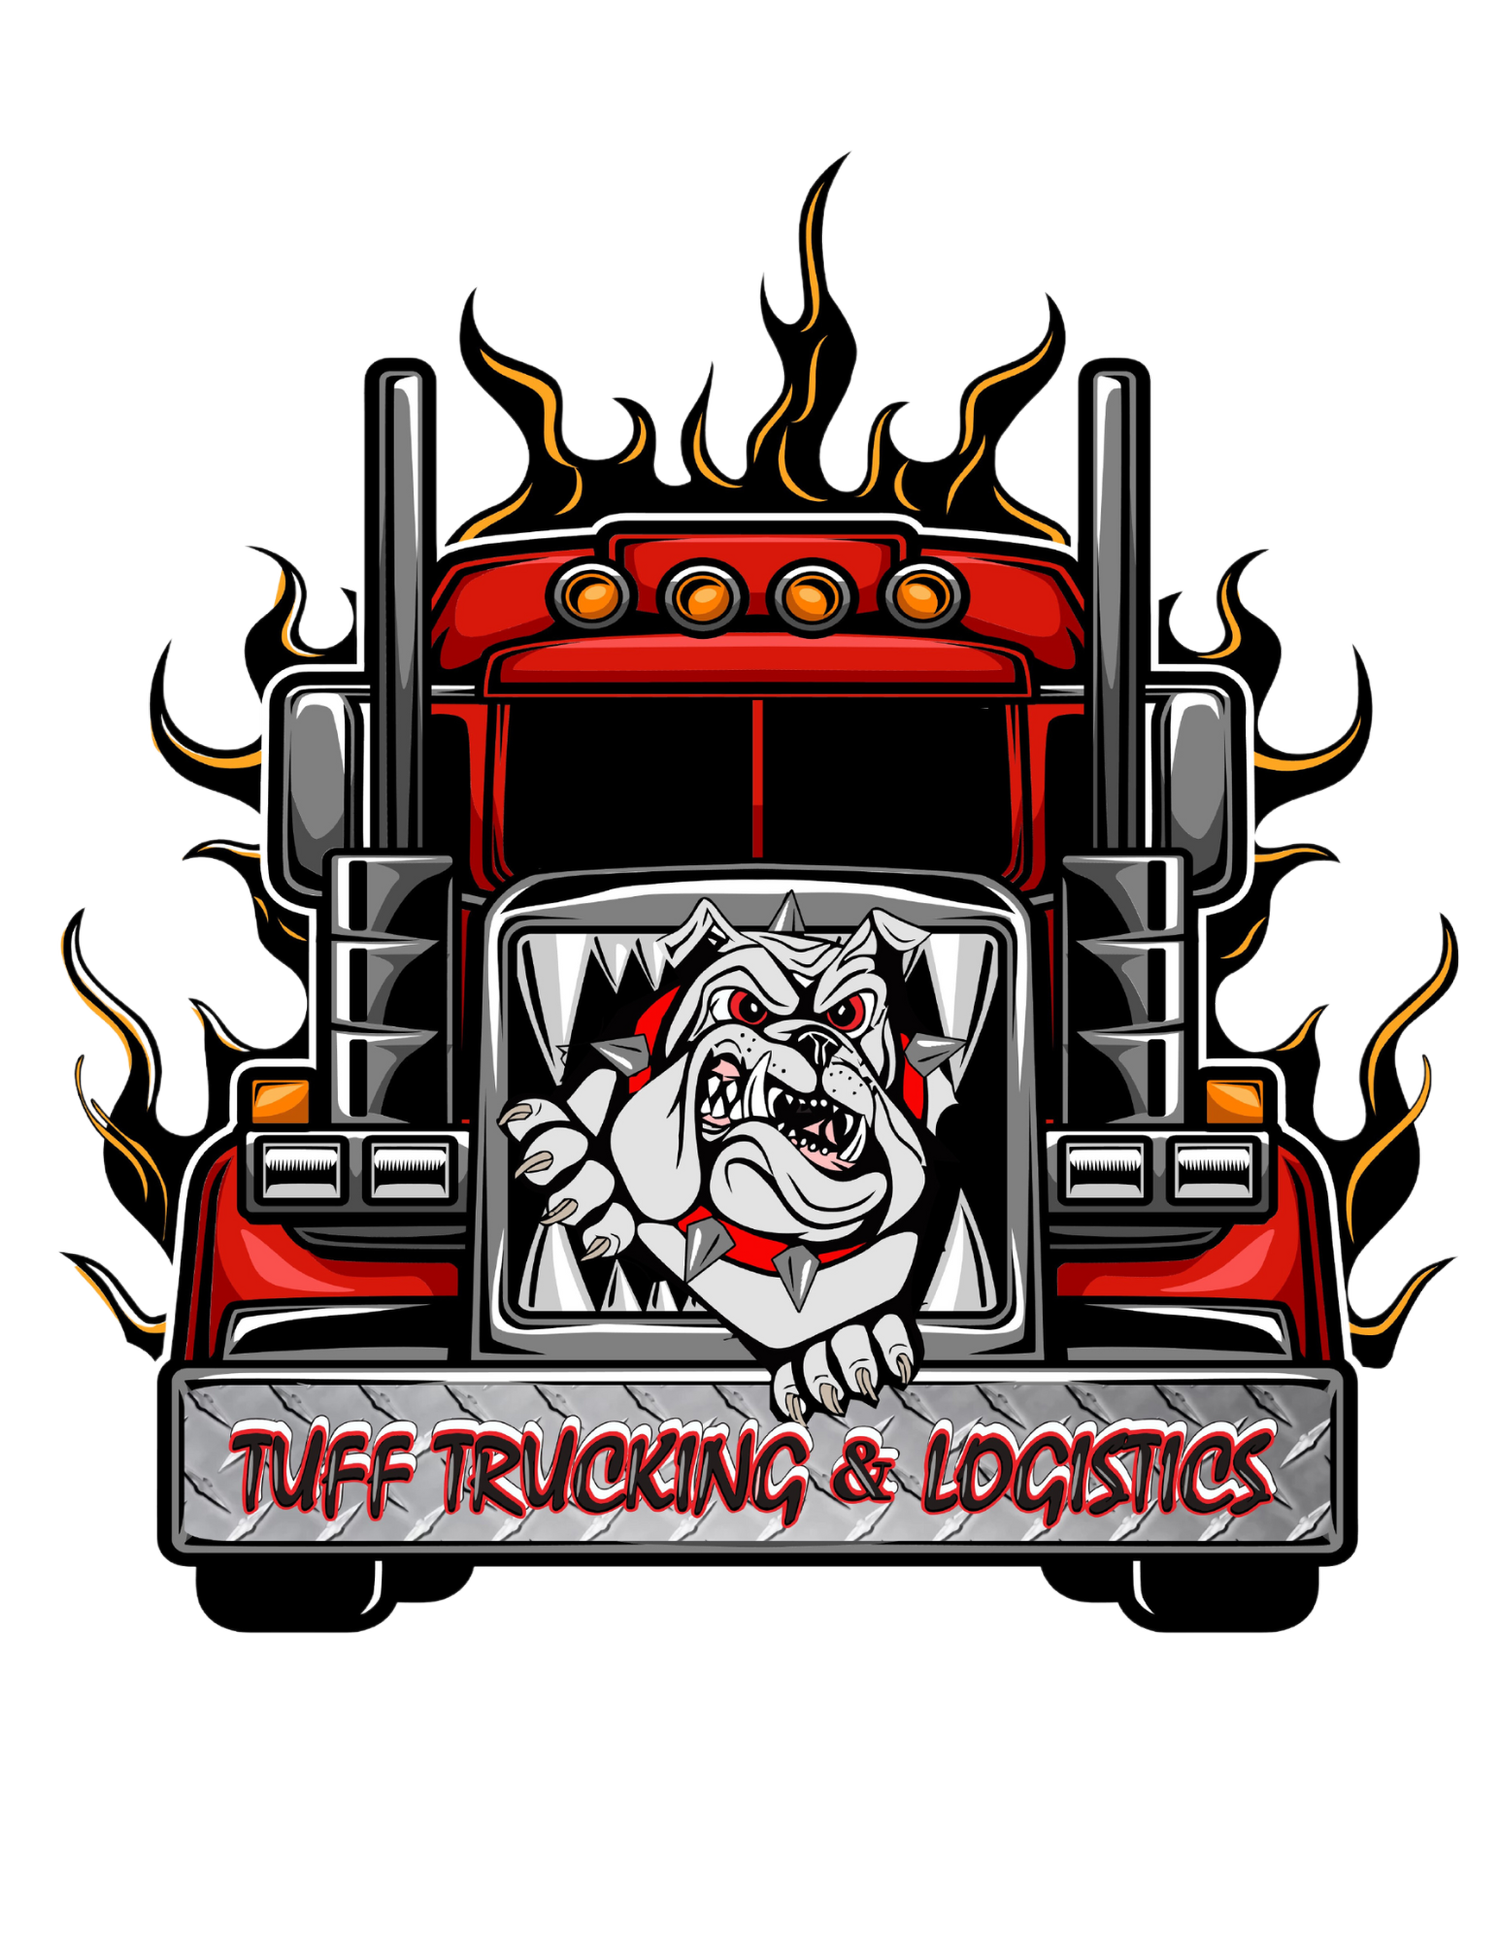 Tuff Trucking and Logistics